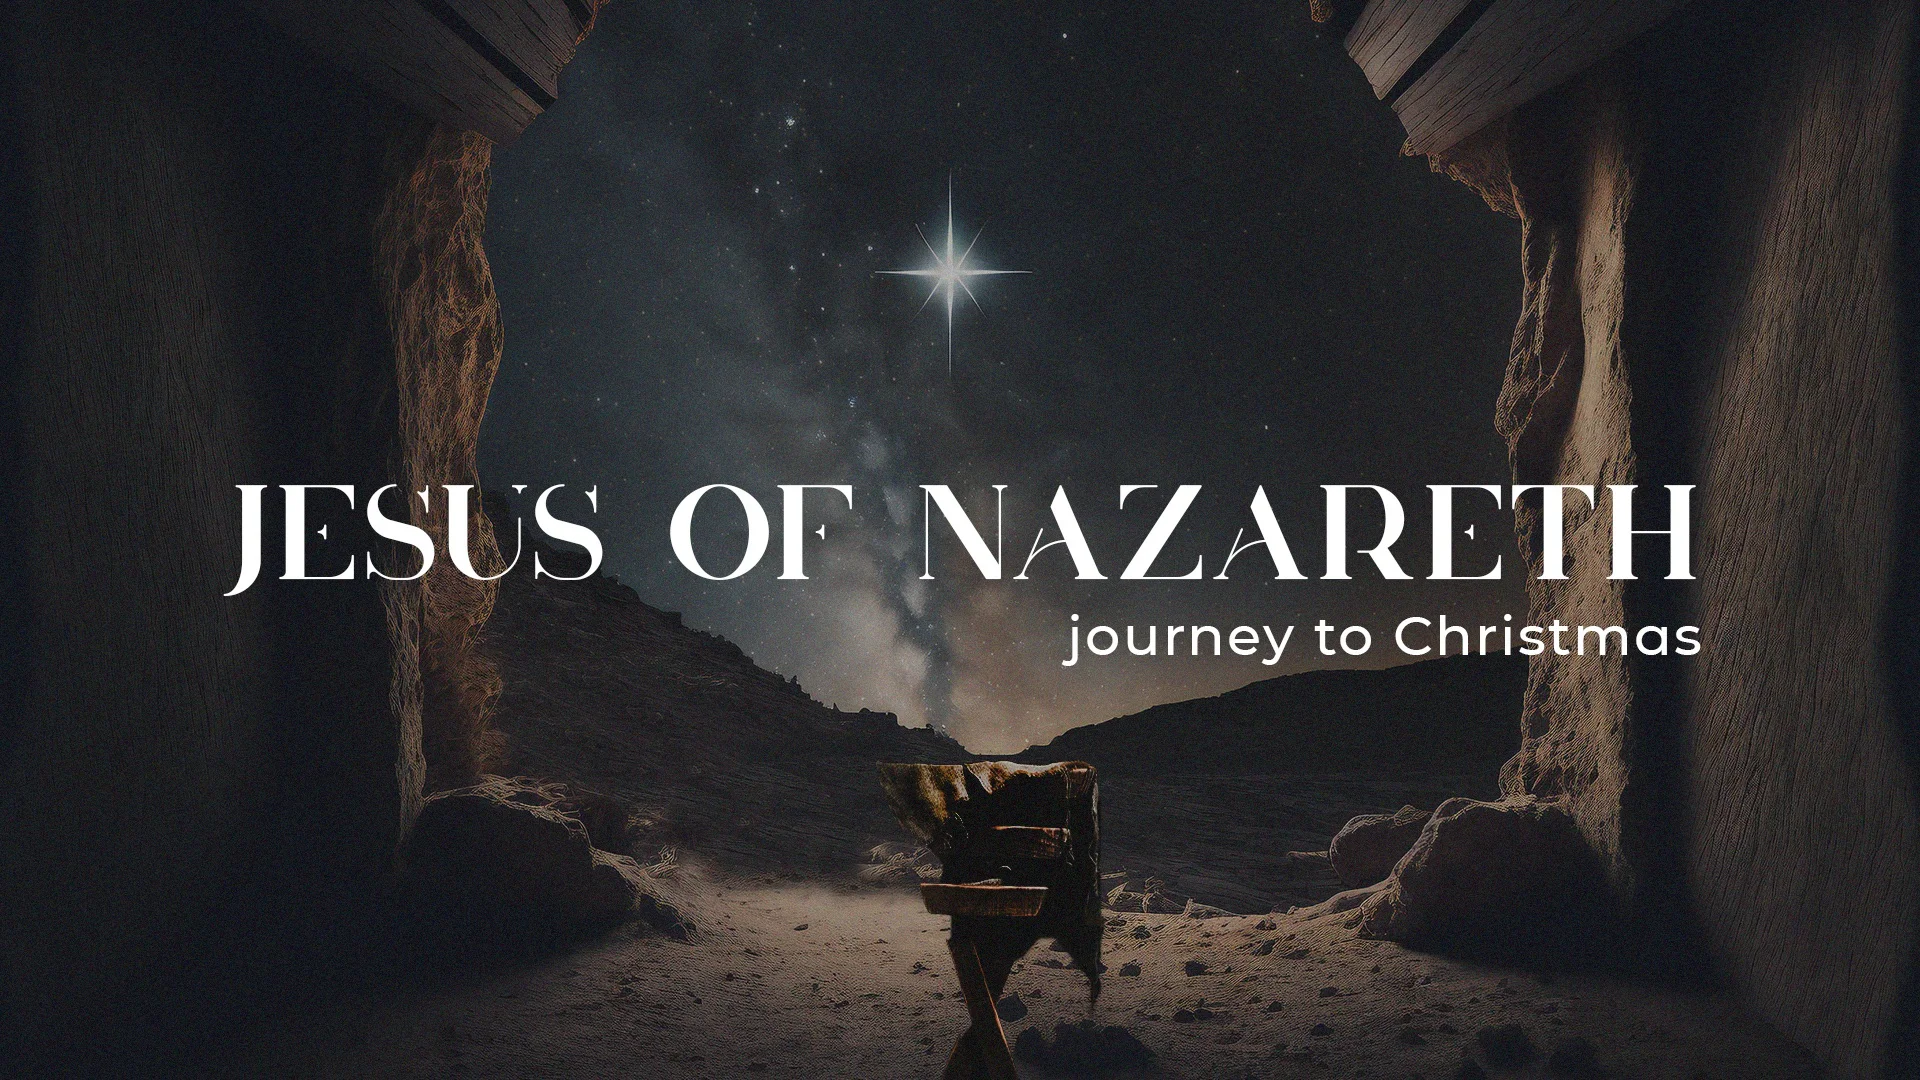 Nazareth - Where Are You Now (1983) on Vimeo